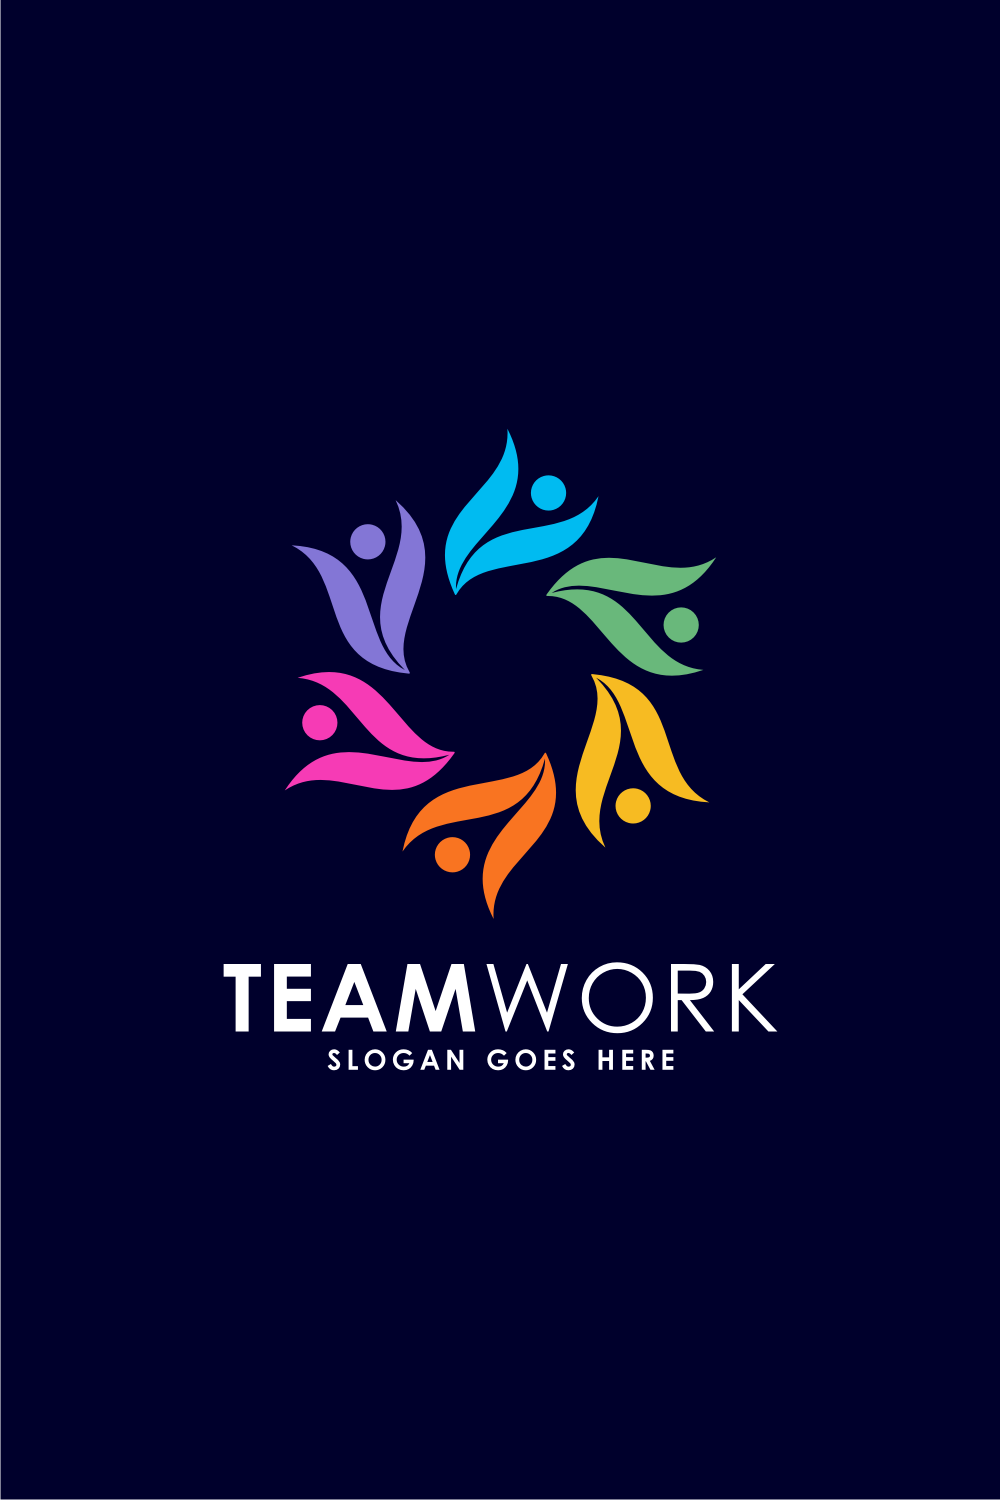 teamwork logo ideas